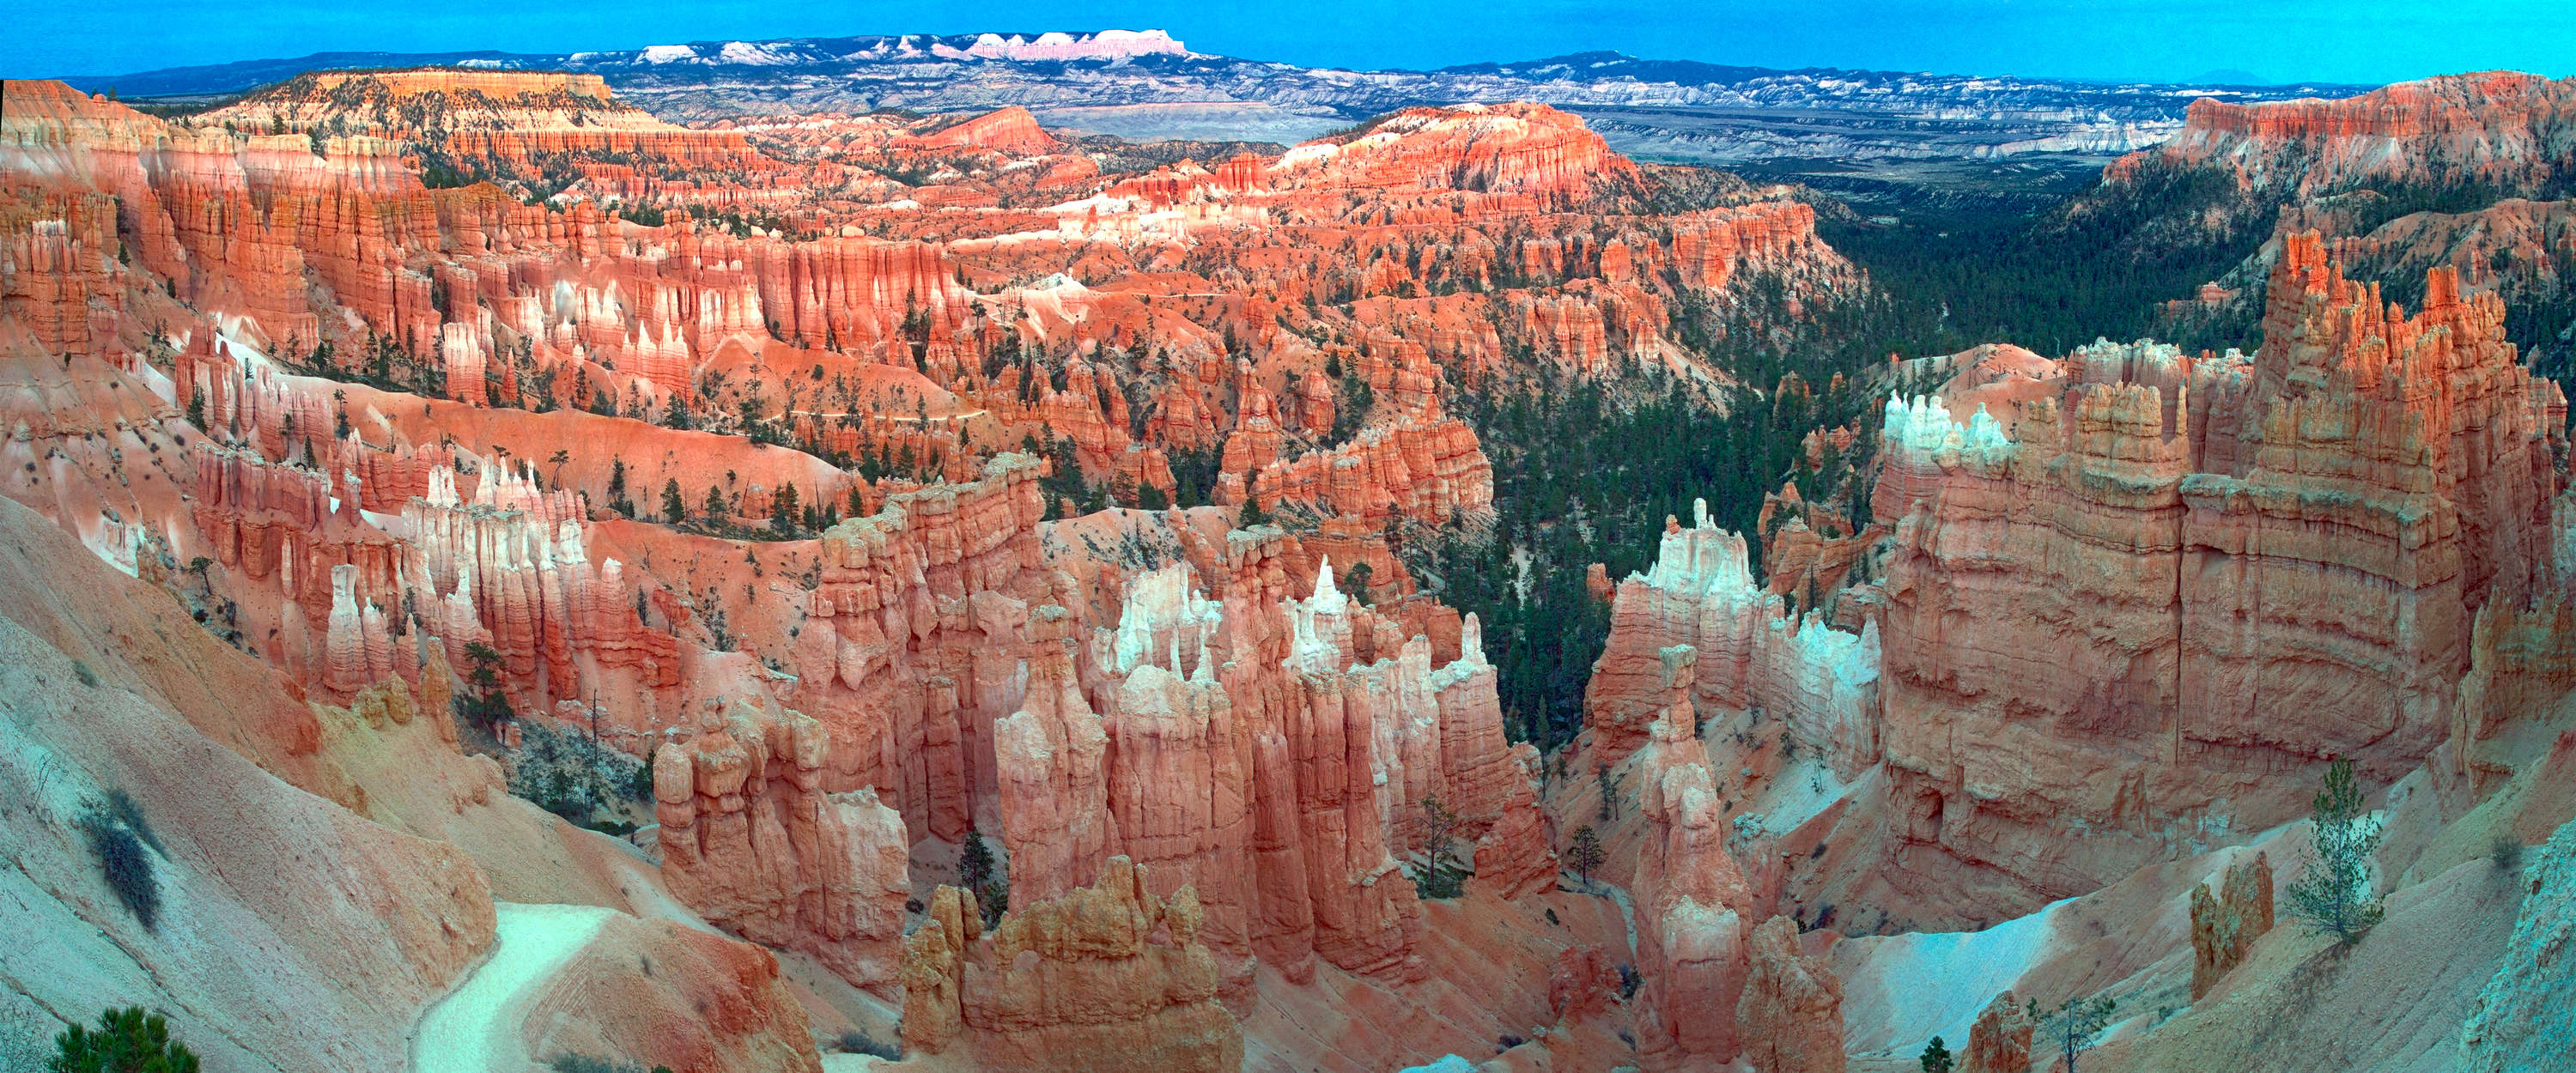             Canyon panorama red & white rock mural
        